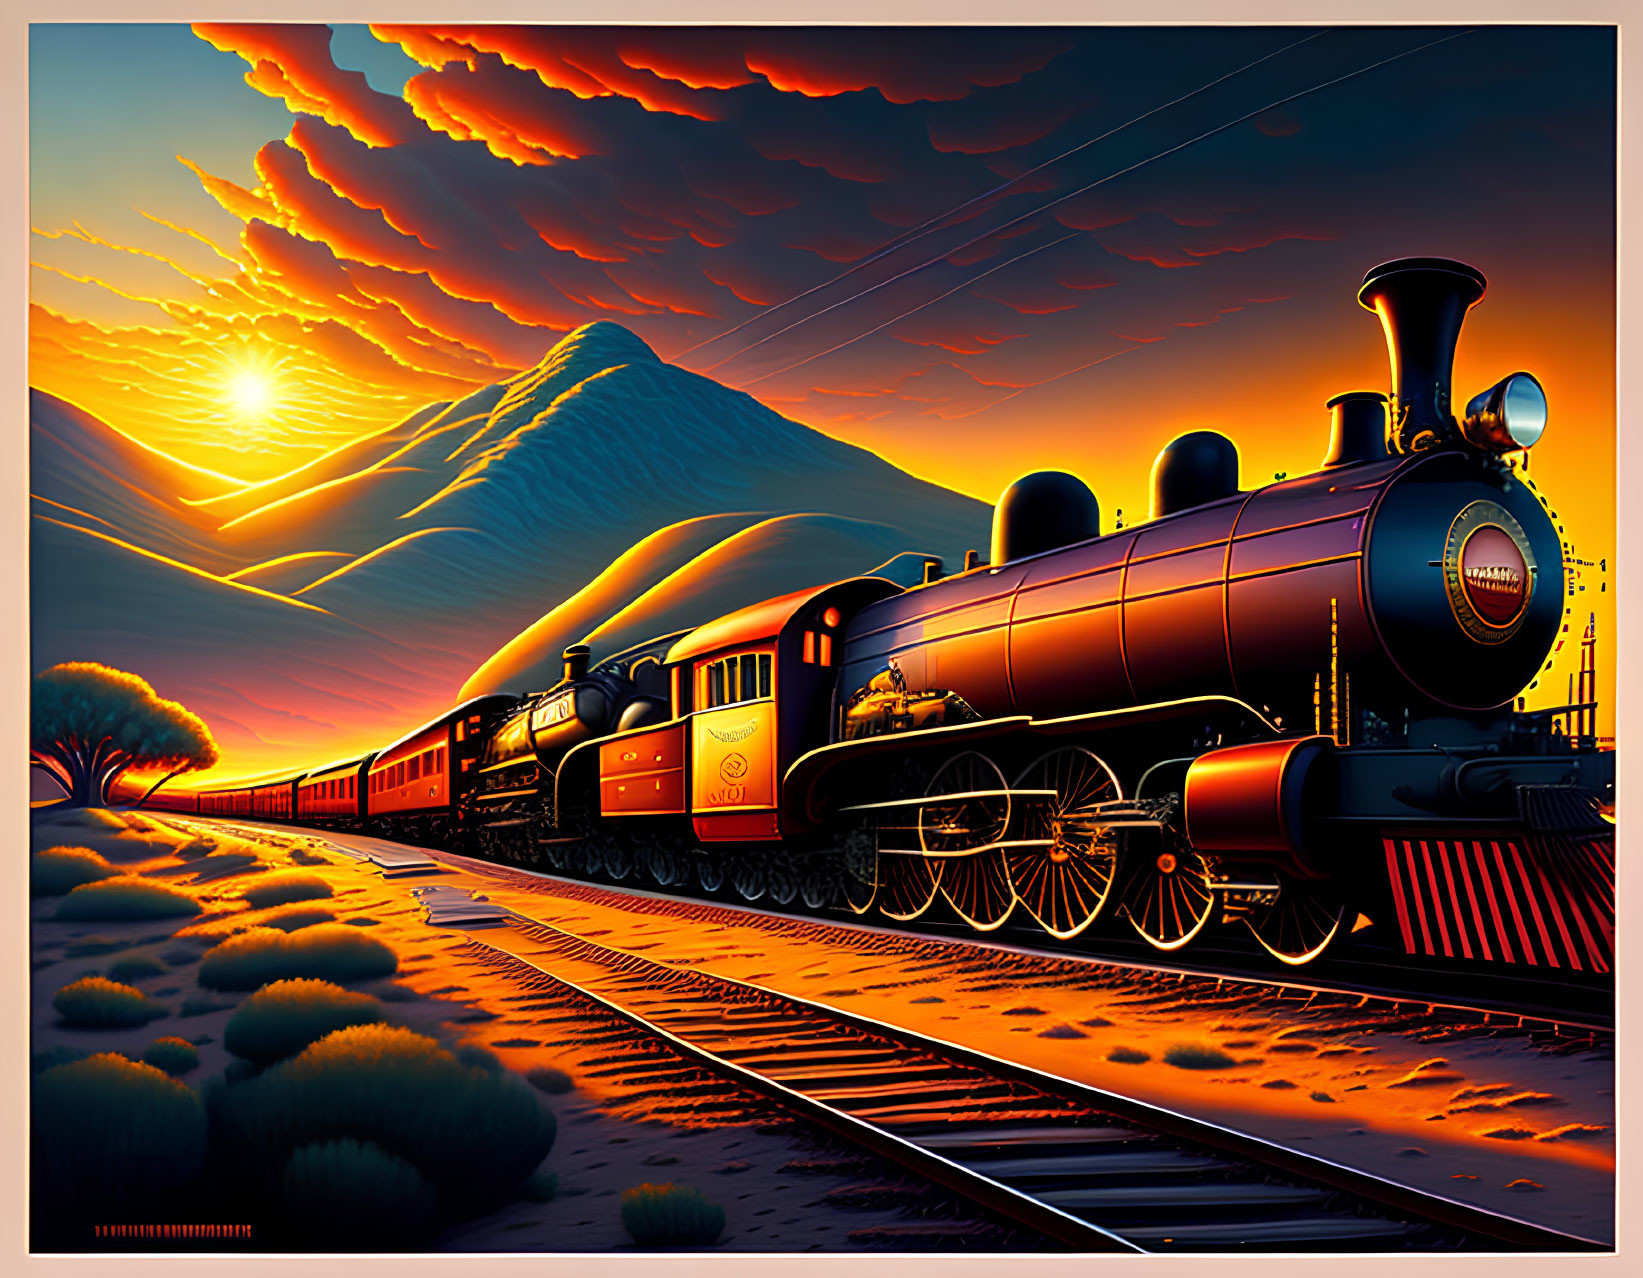 Vintage steam train by mountain under orange sky at sunset